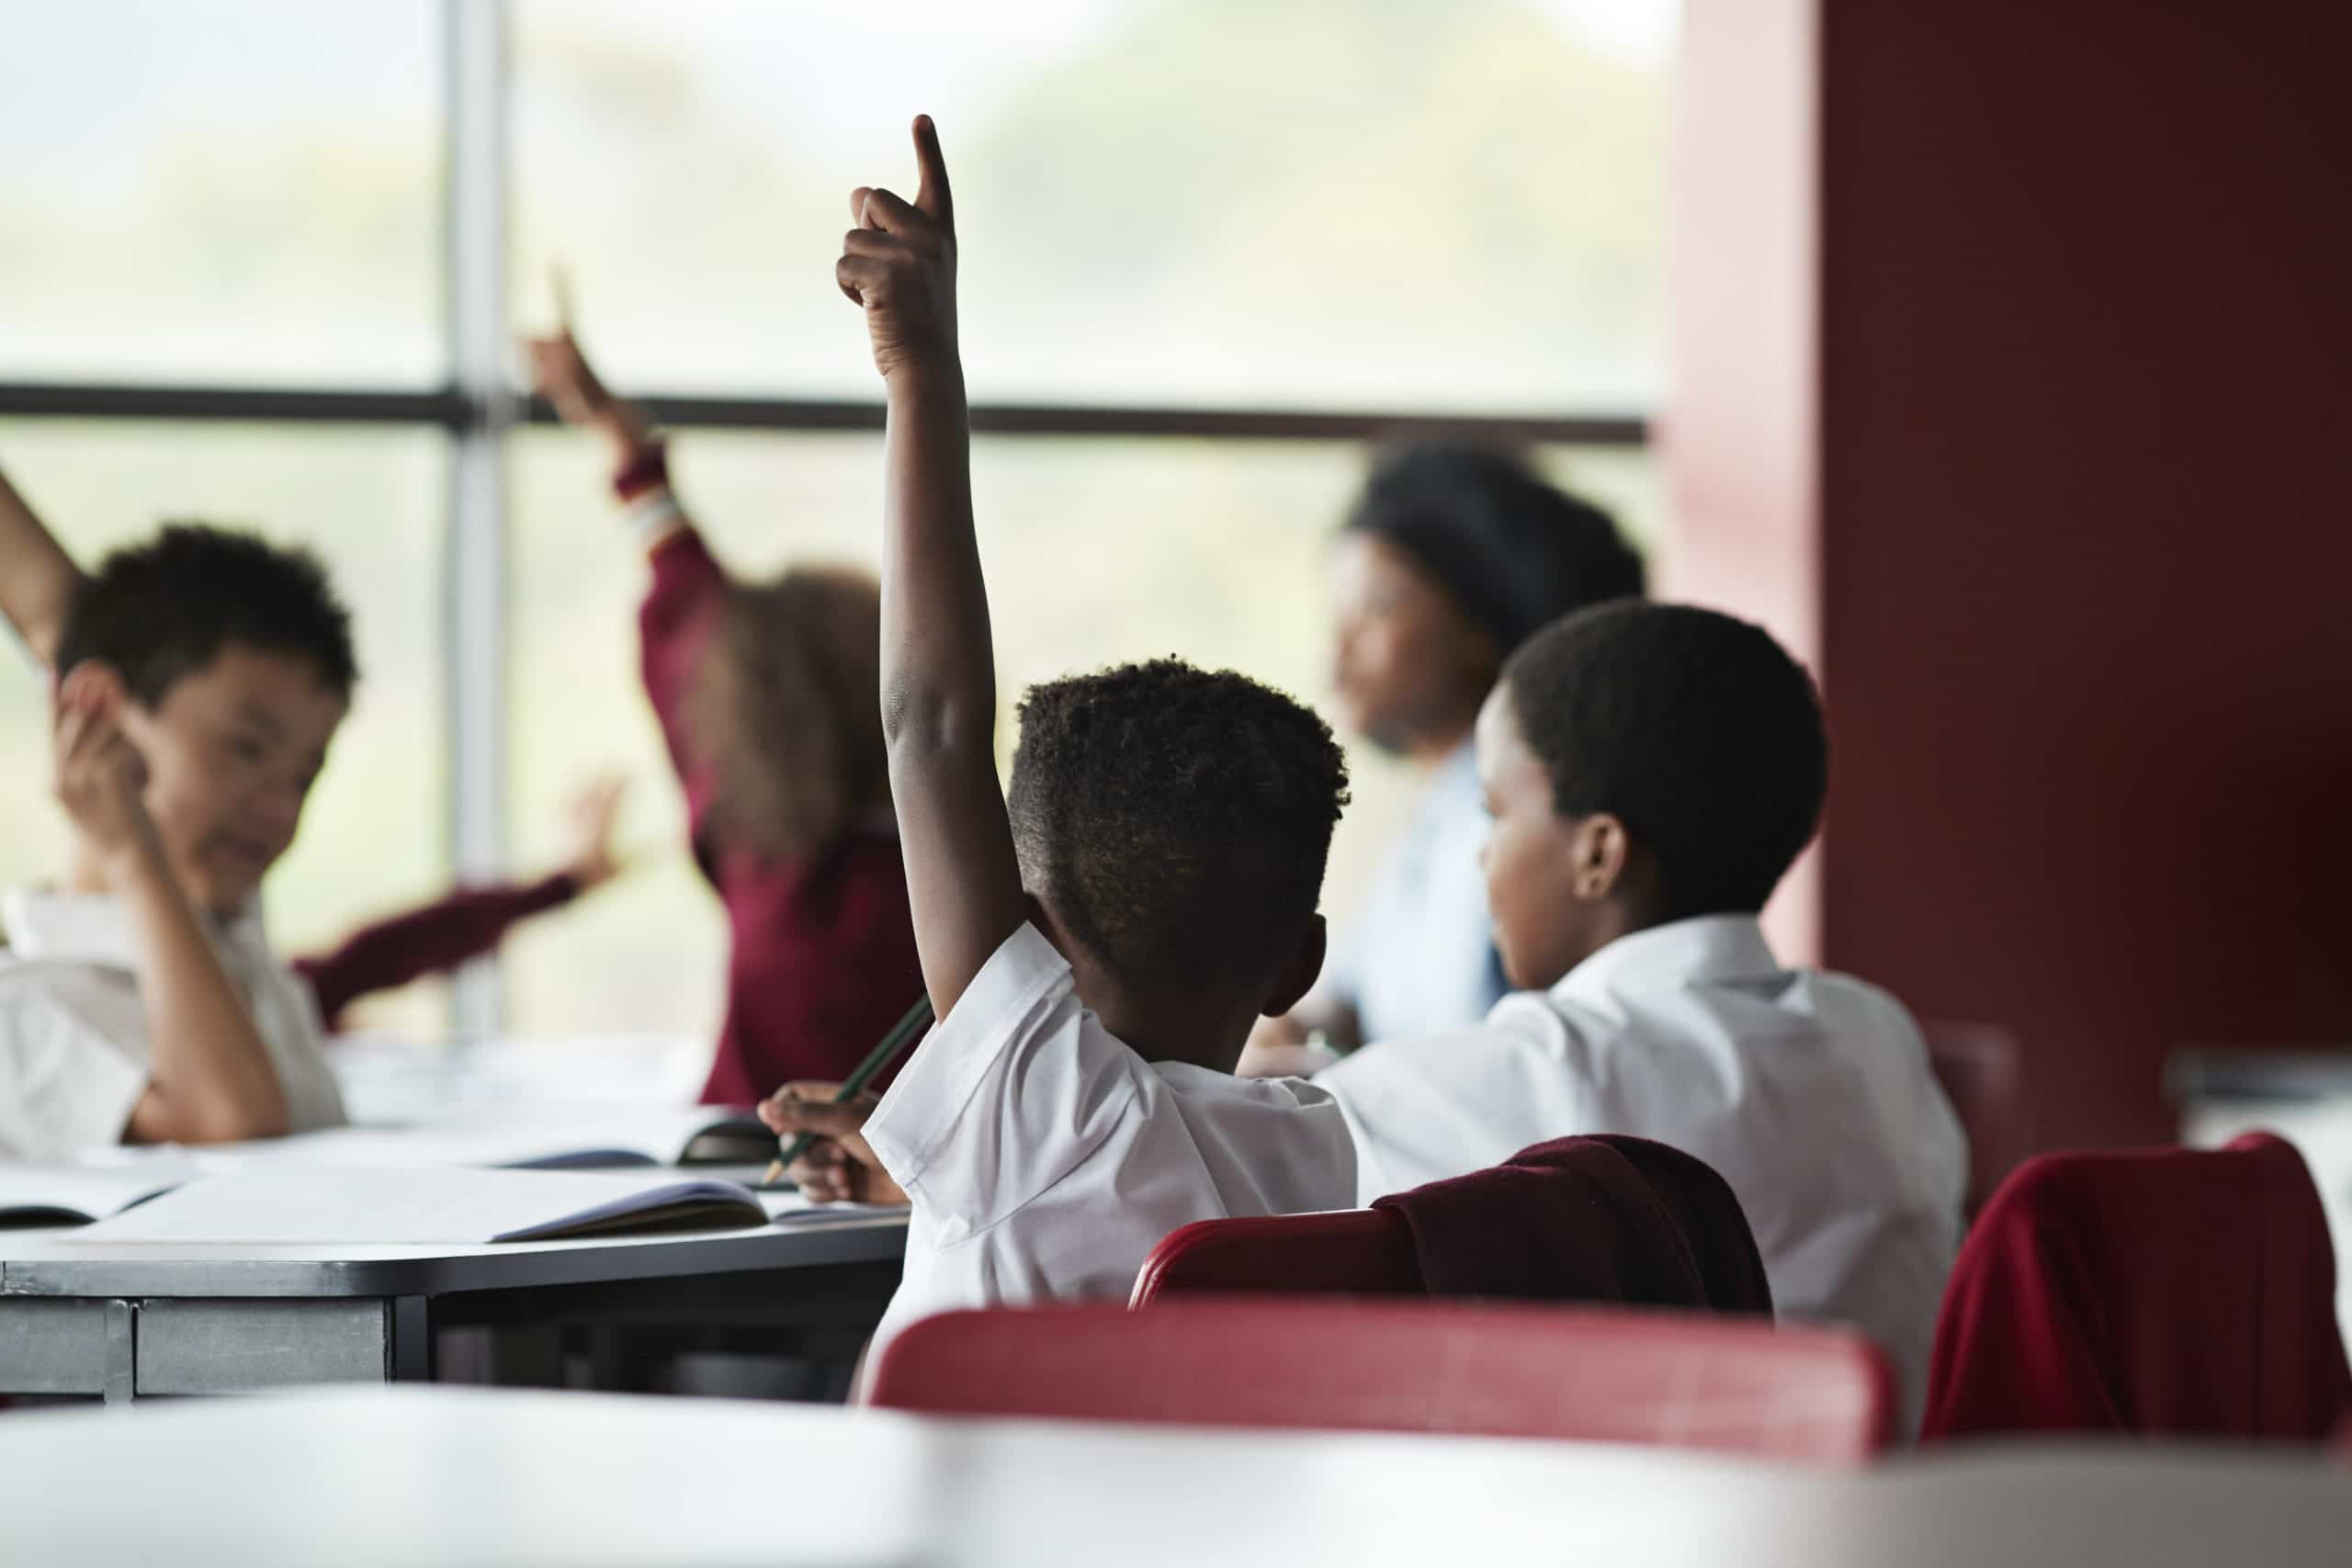 Focus on raised hands in classroom